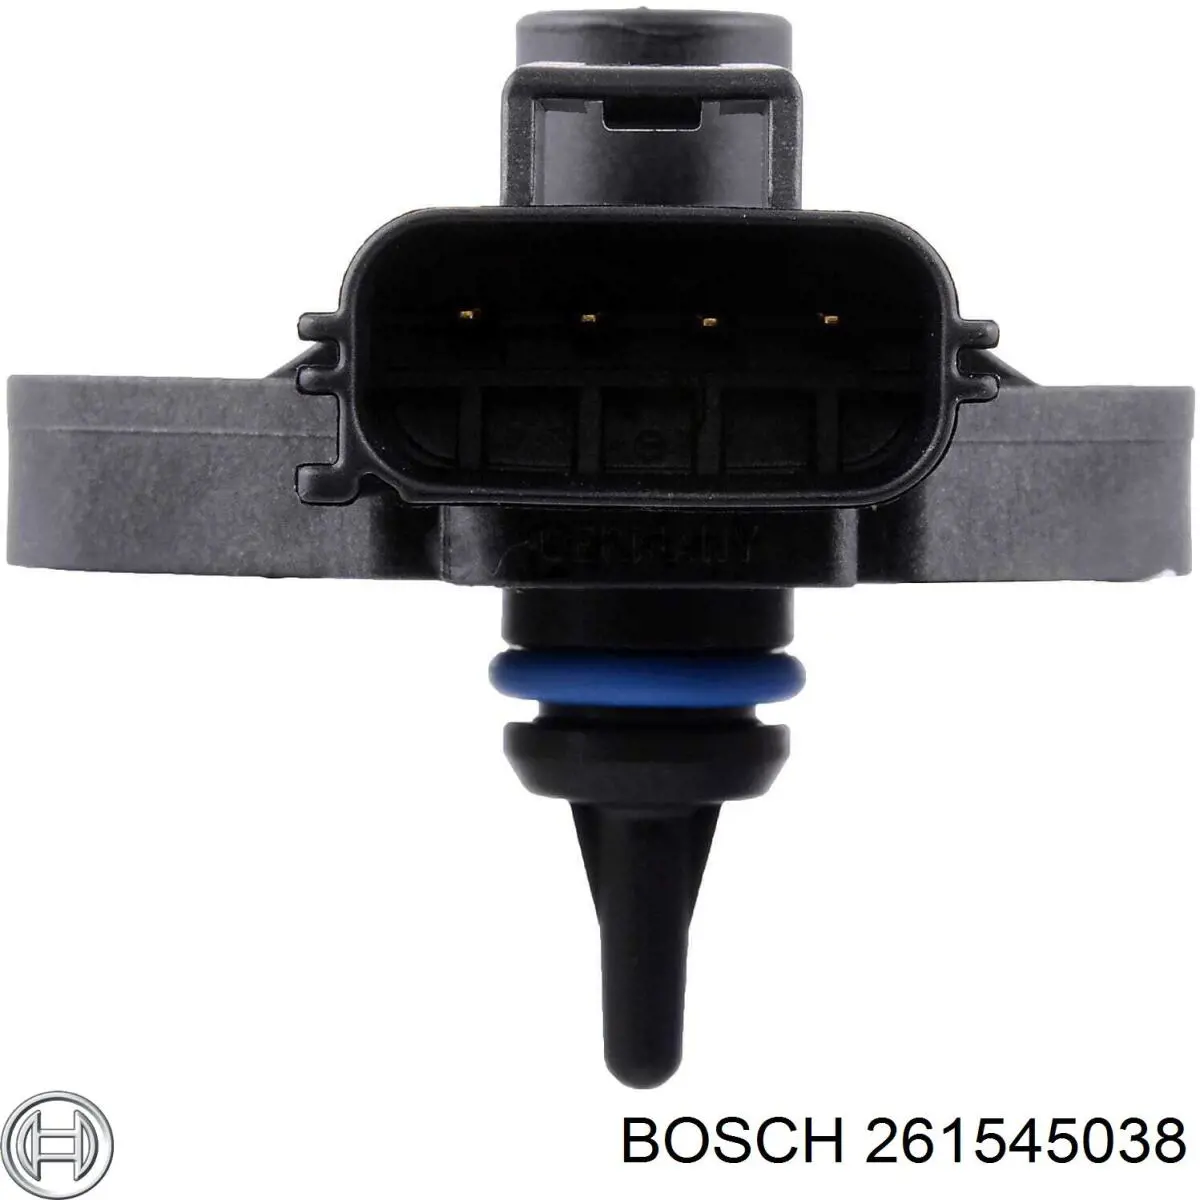 261545038 Bosch sensor de presión de combustible